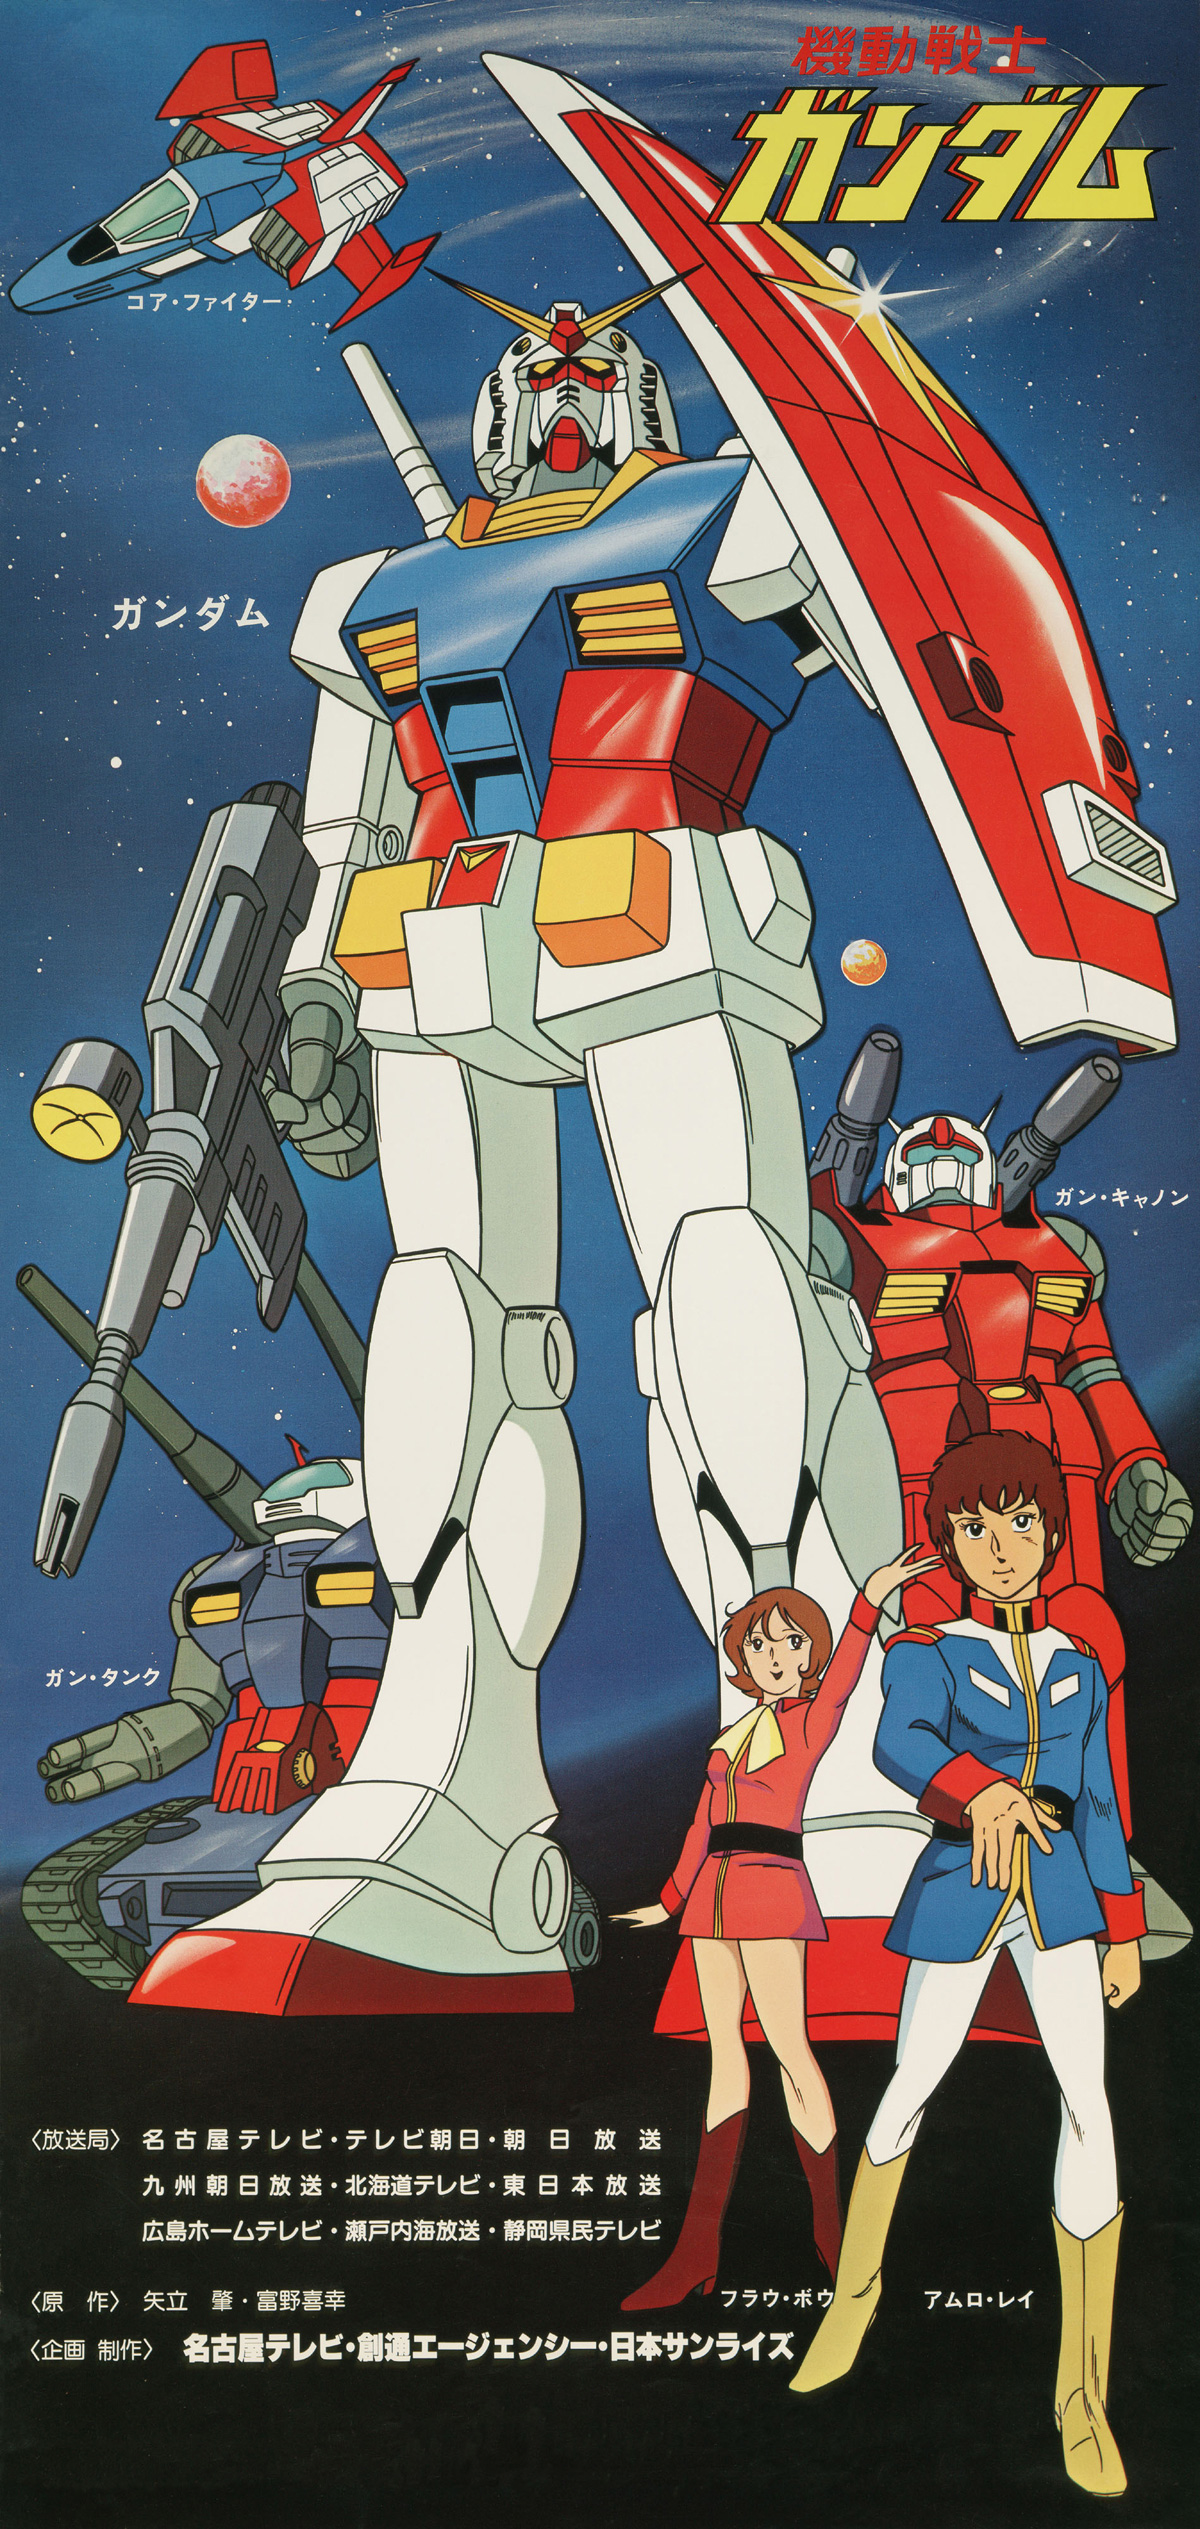 Athah Designs Anime Mobile Suit Gundam 00 Gundam 00 Mecha Gundam GN001  Gundam Exia 1319 inches Wall Poster Matte Finish  Amazonin